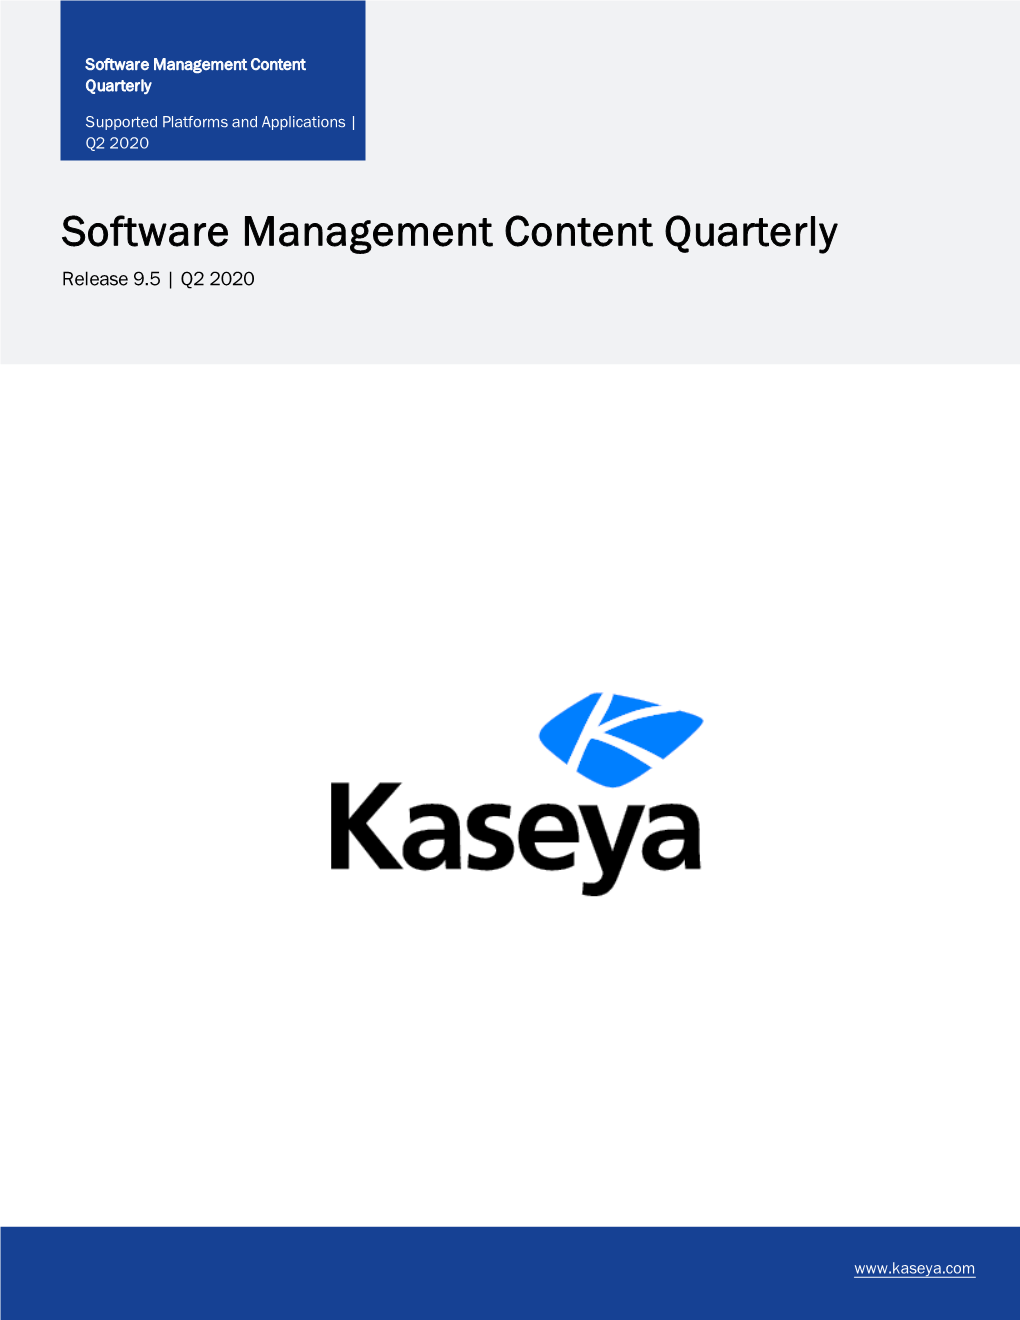 Software Management Content Quarterly